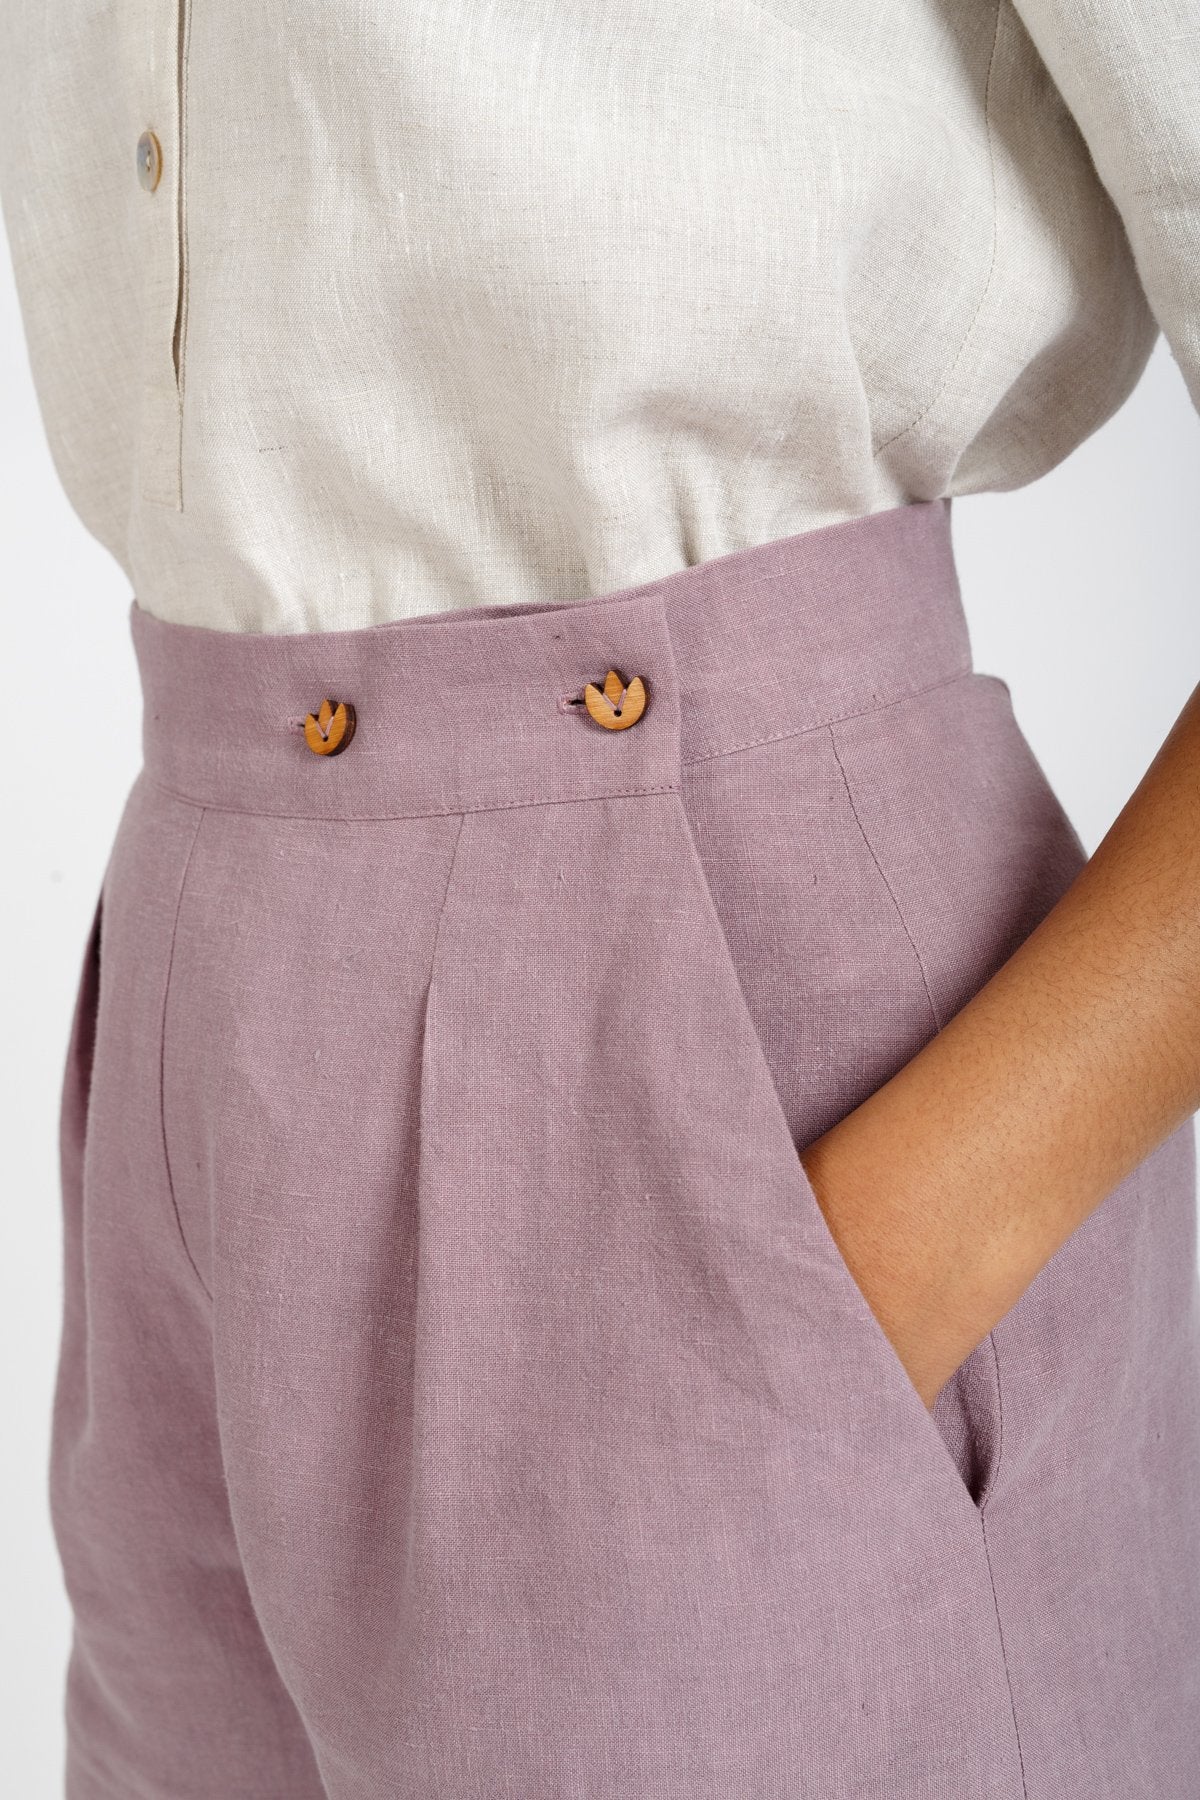 Flint Pants & Shorts Sewing Pattern by Megan Nielsen Patterns – Sew Sew Sew